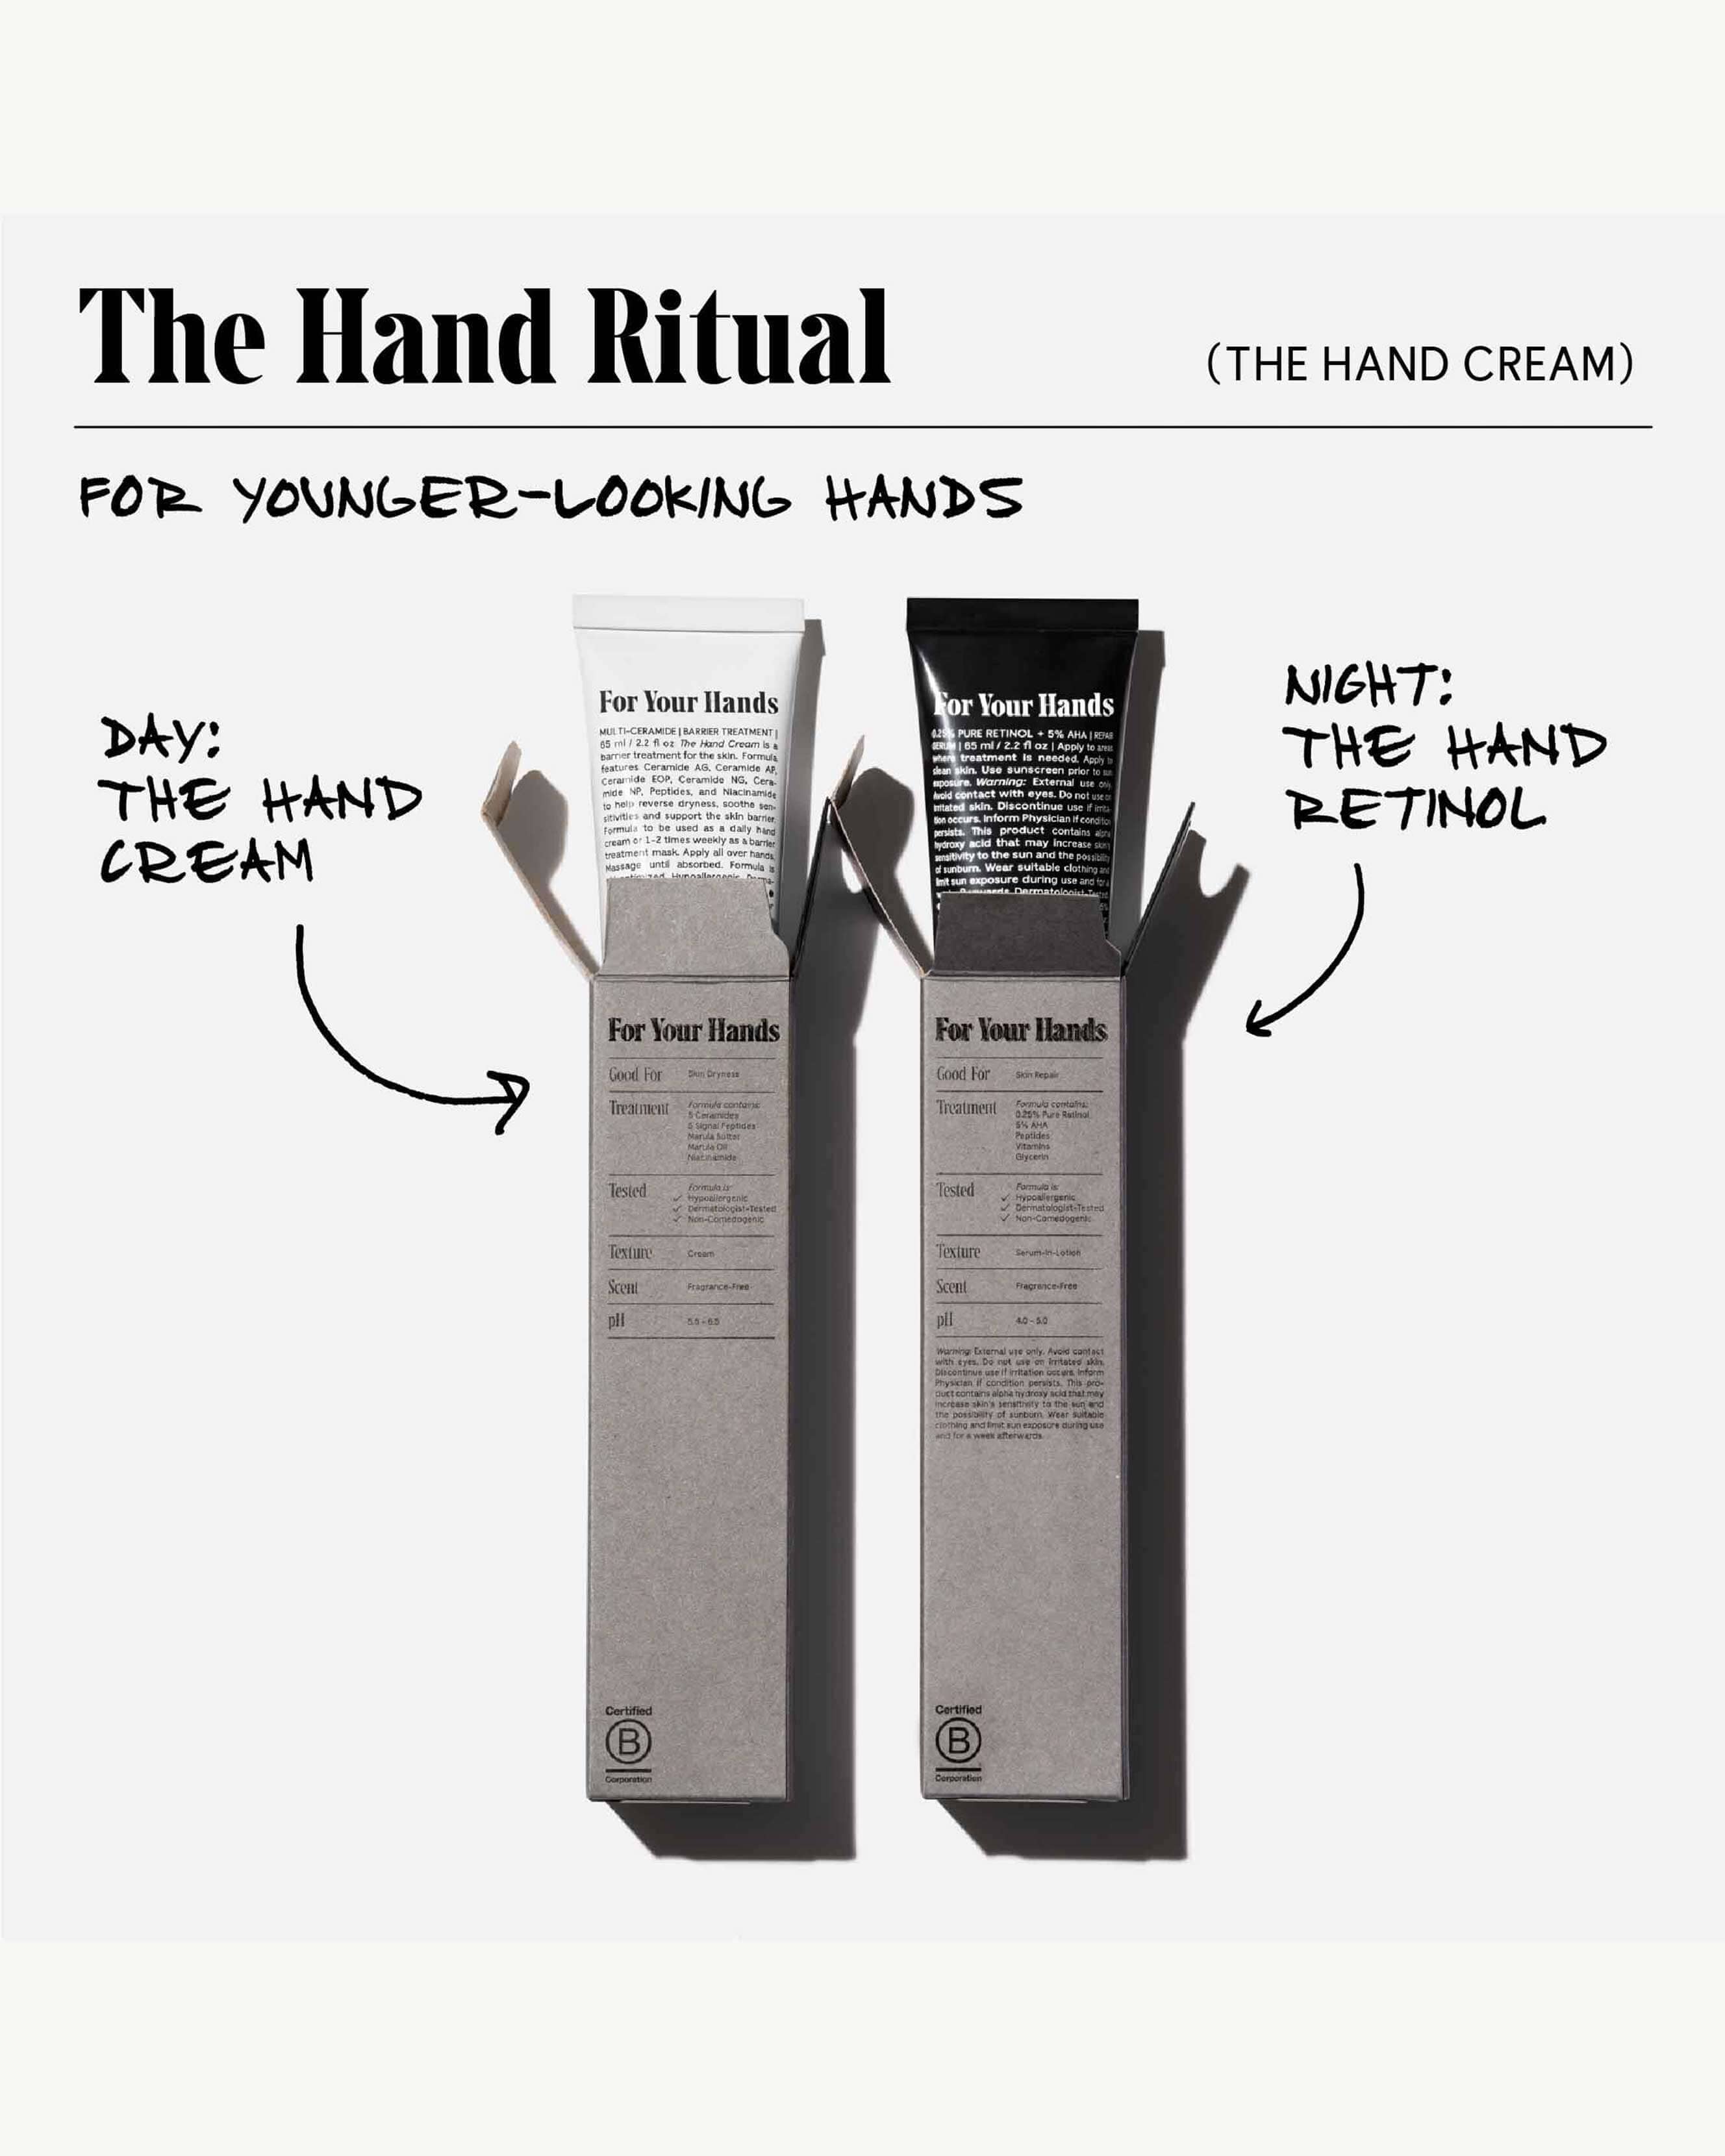 The Hand Cream